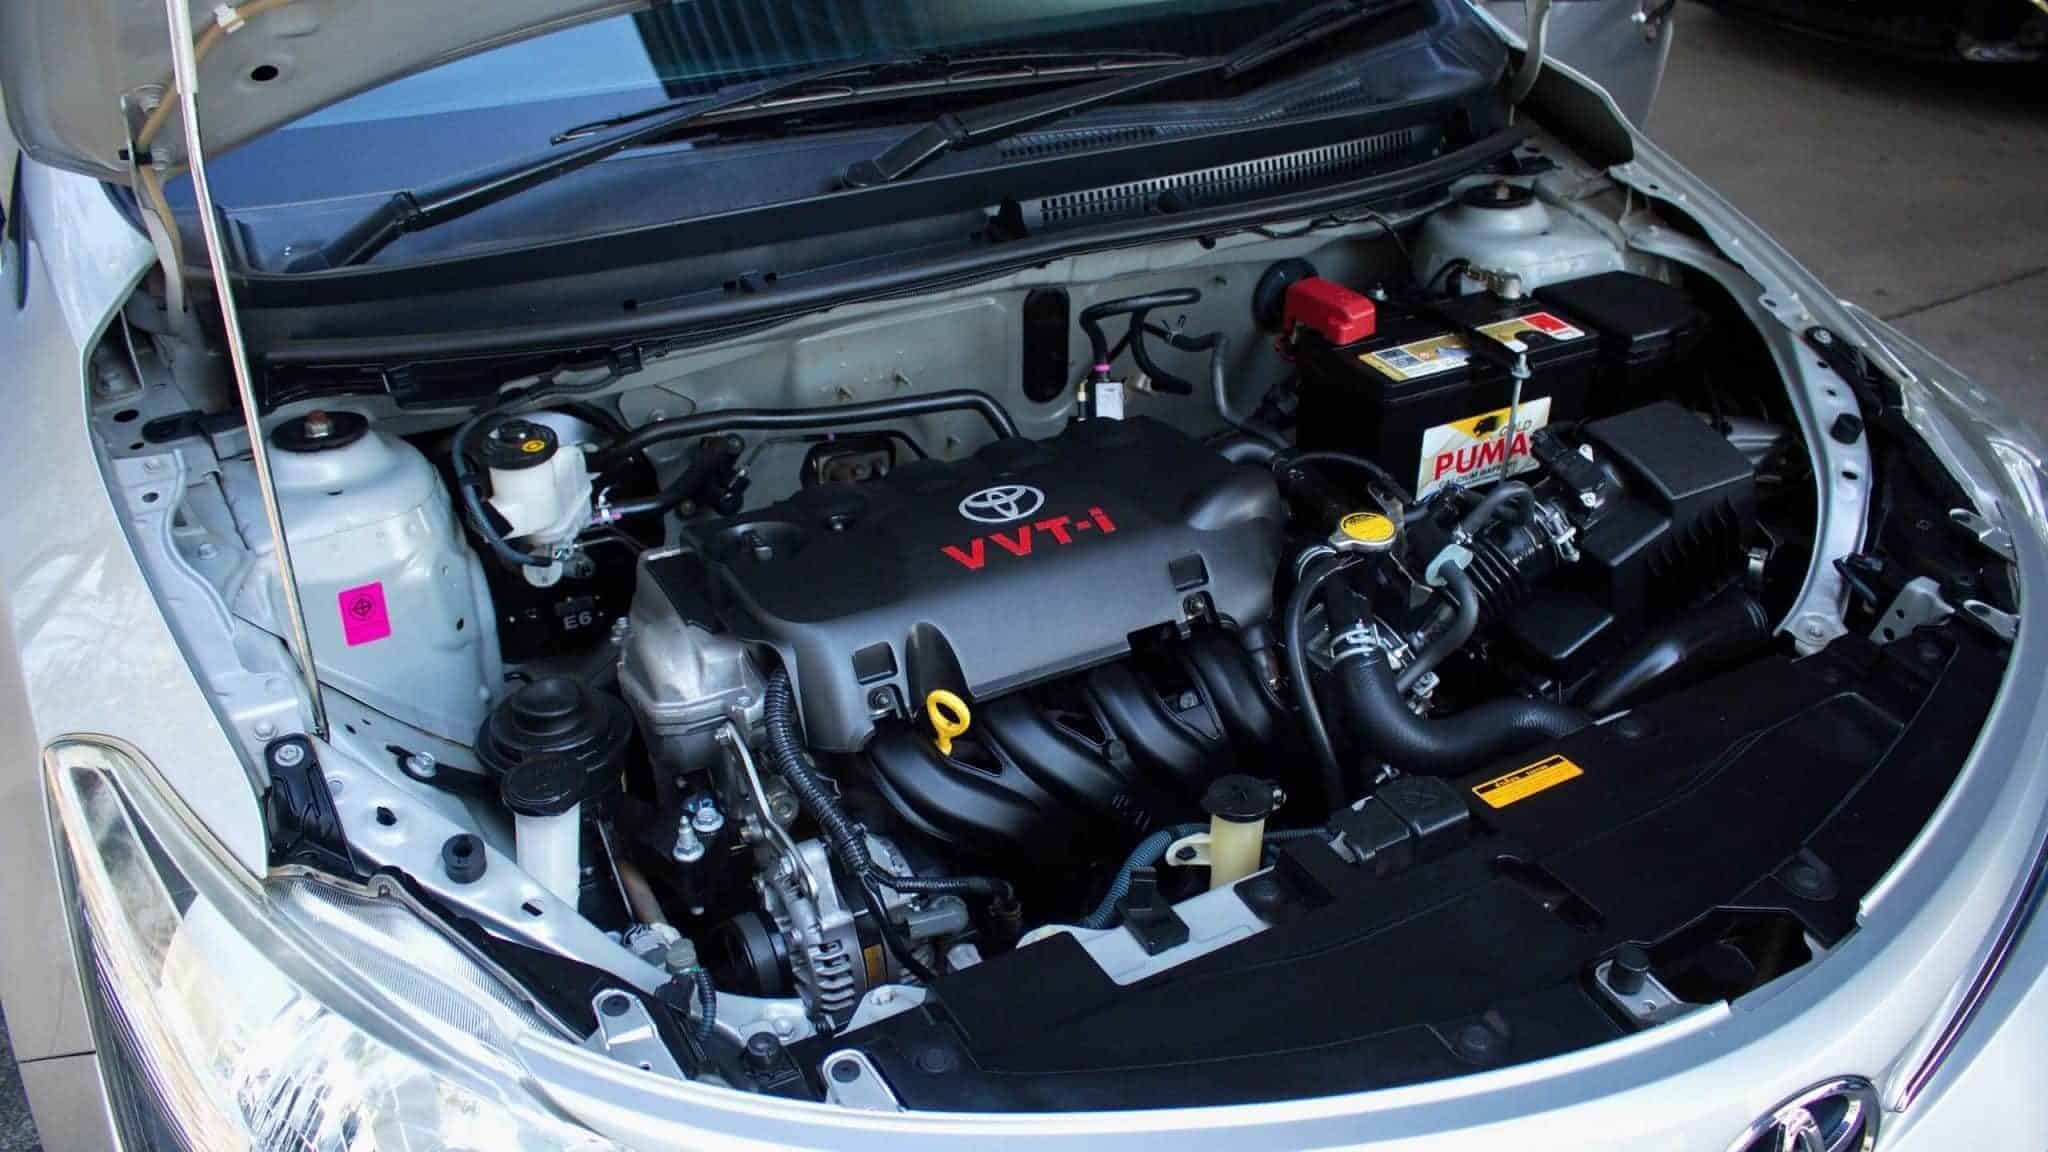 2015 (MY13) Toyota Vios 1.5 JA/T full